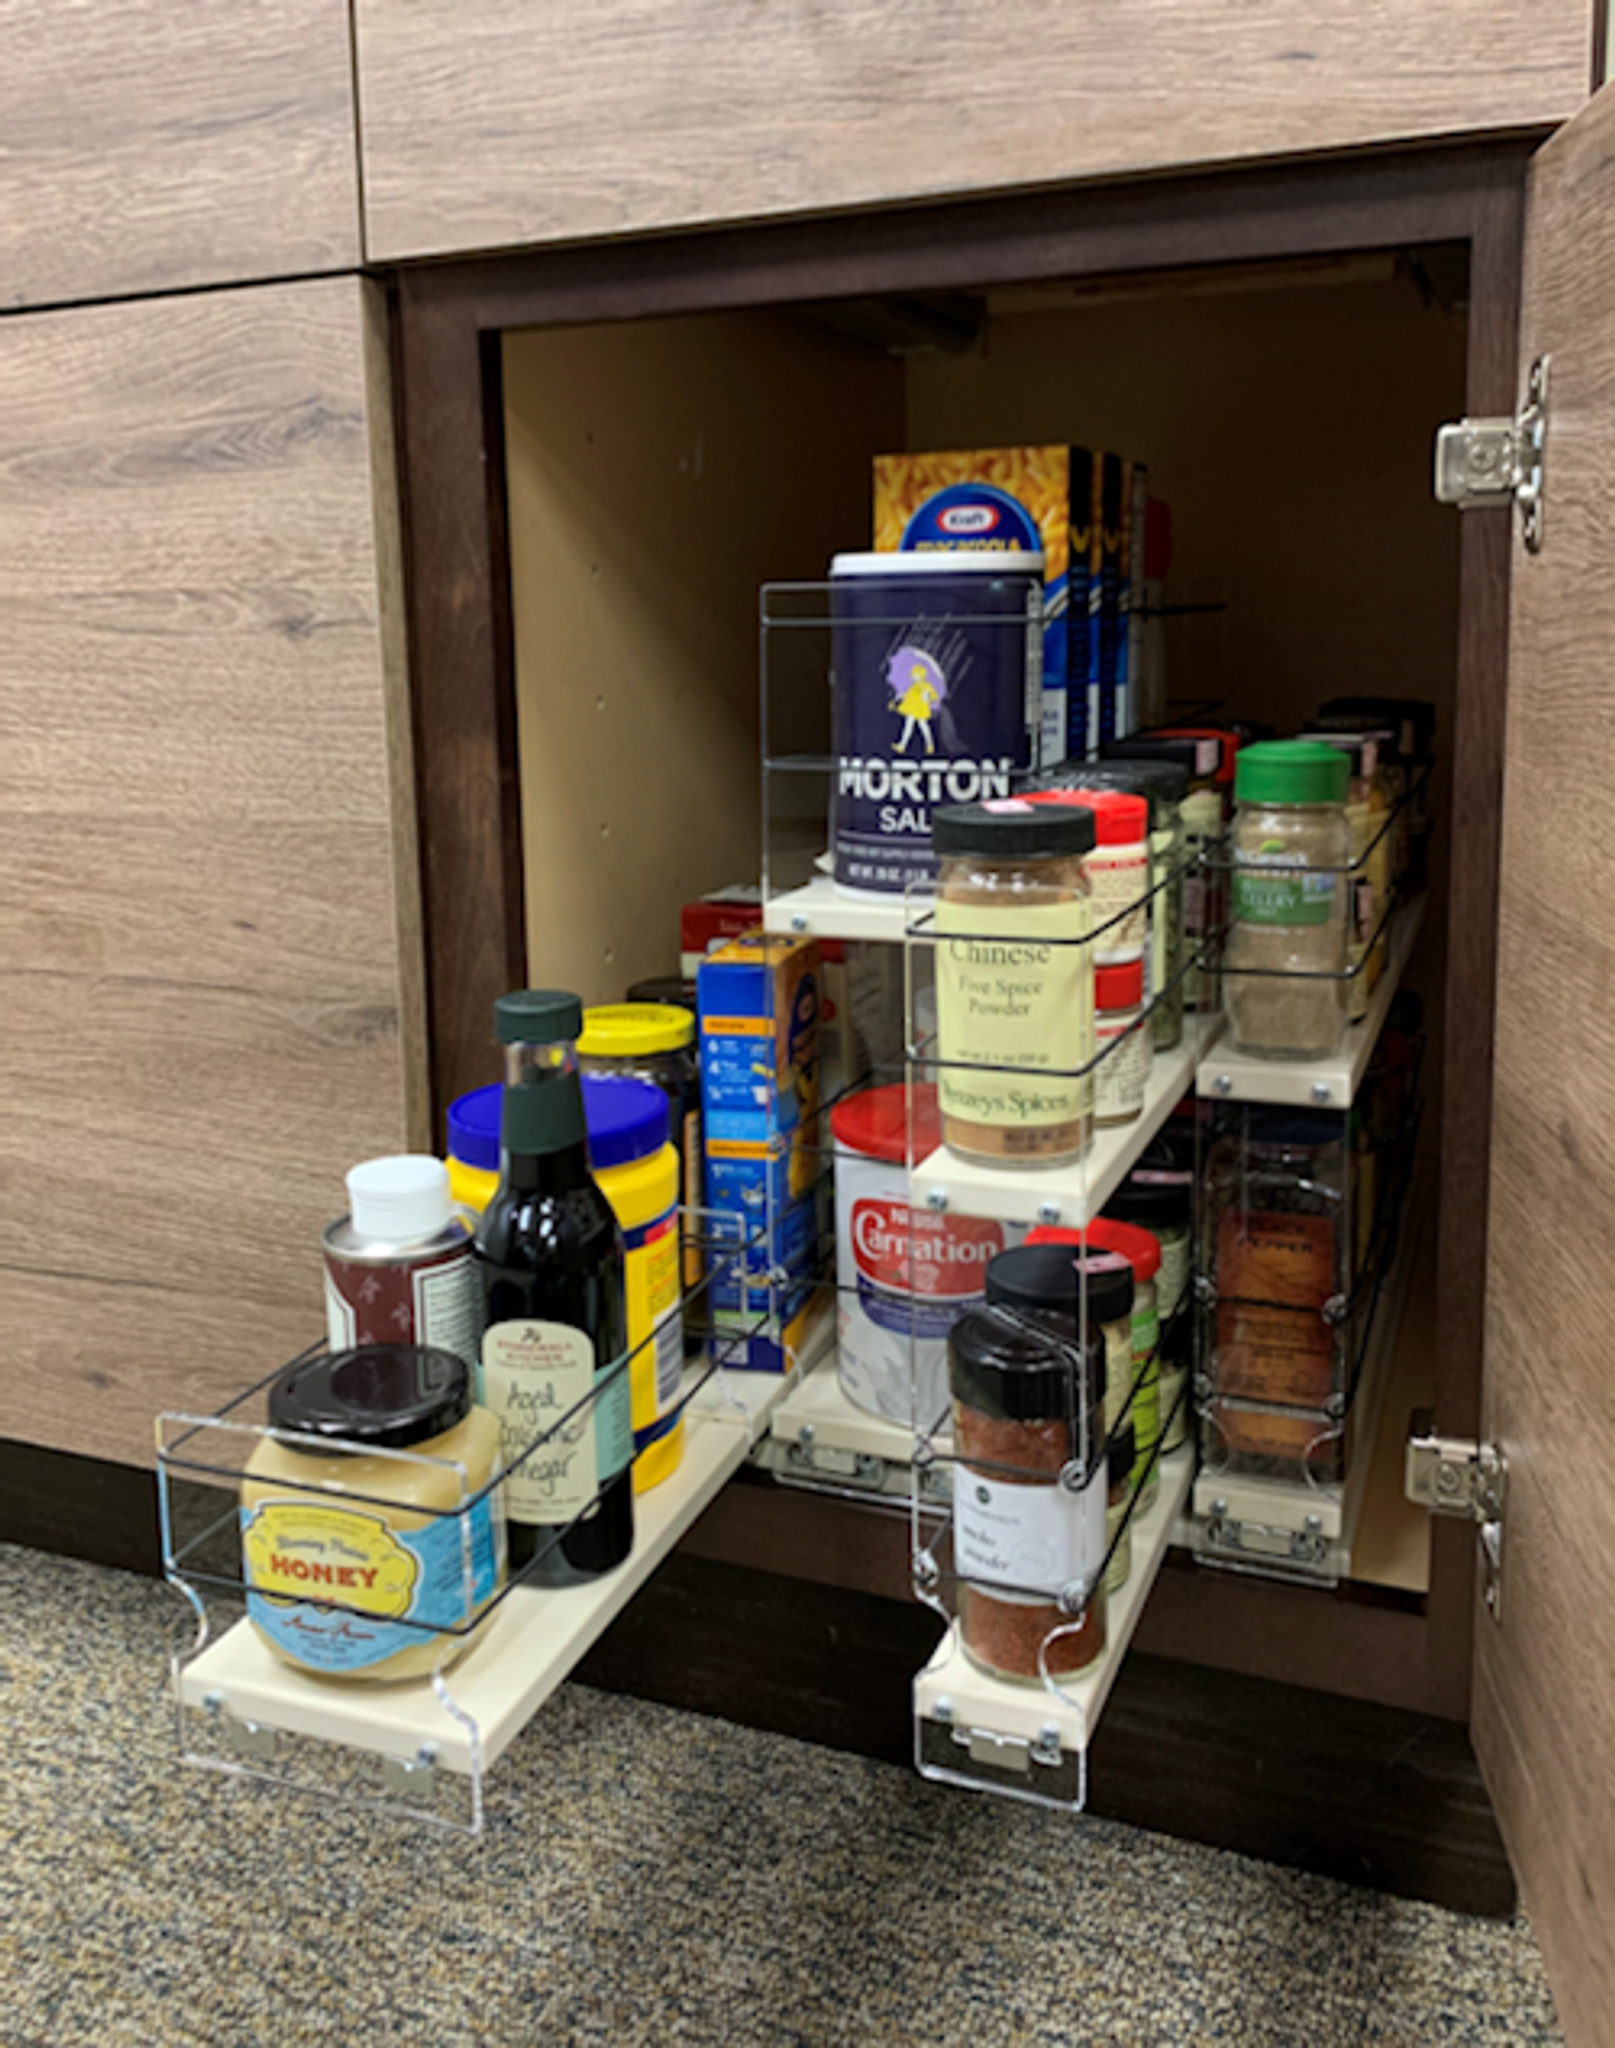 22x2x18 Spice Rack, 2 Tier Cabinet Insert